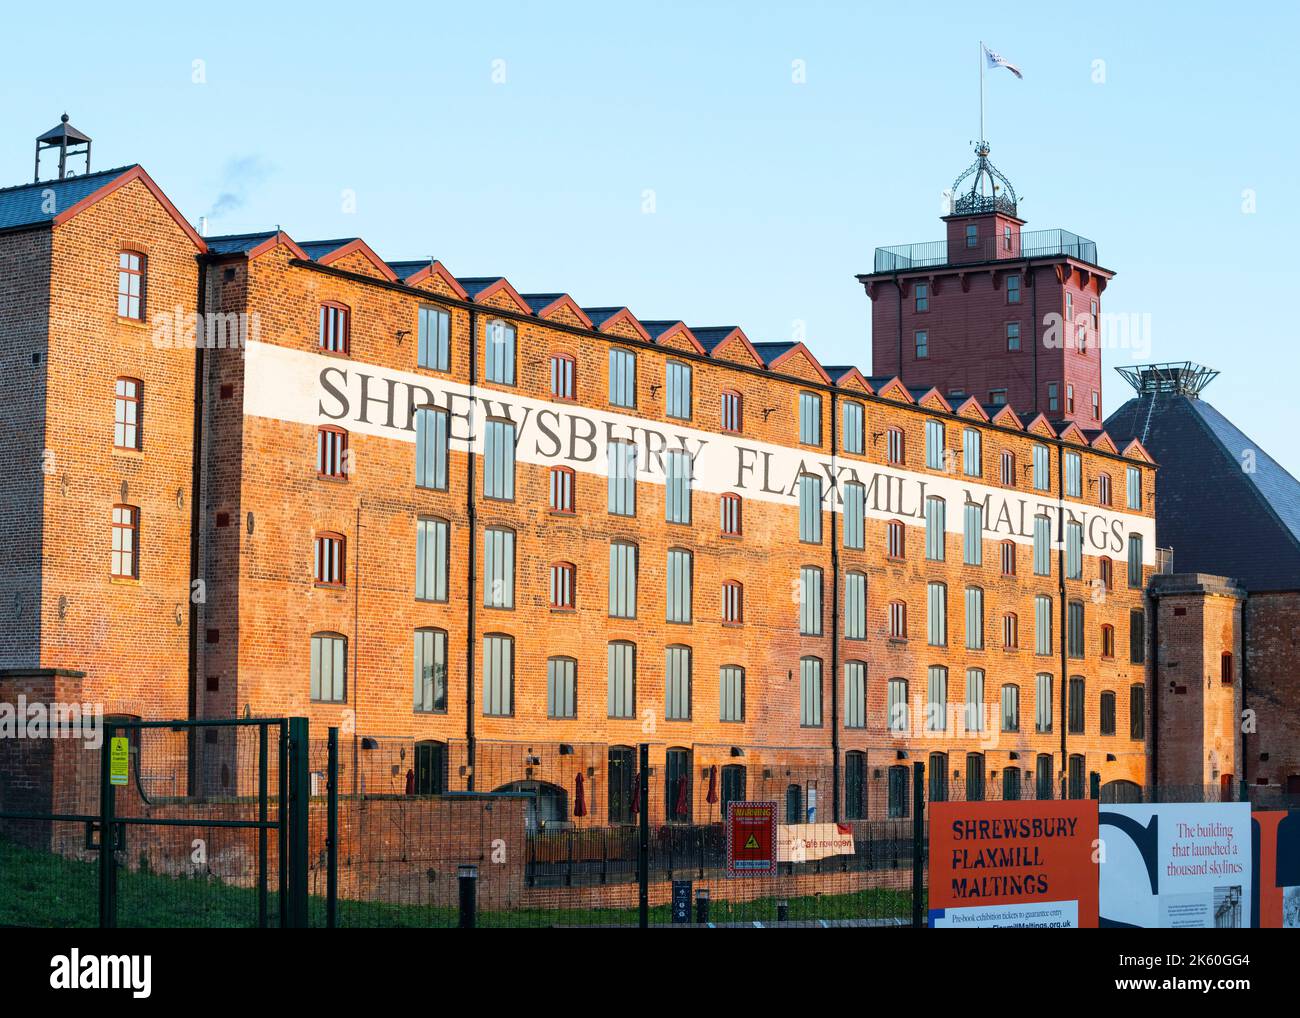 Die Flaxmill Maltings in Shrewsbury, Shropshire. Stockfoto